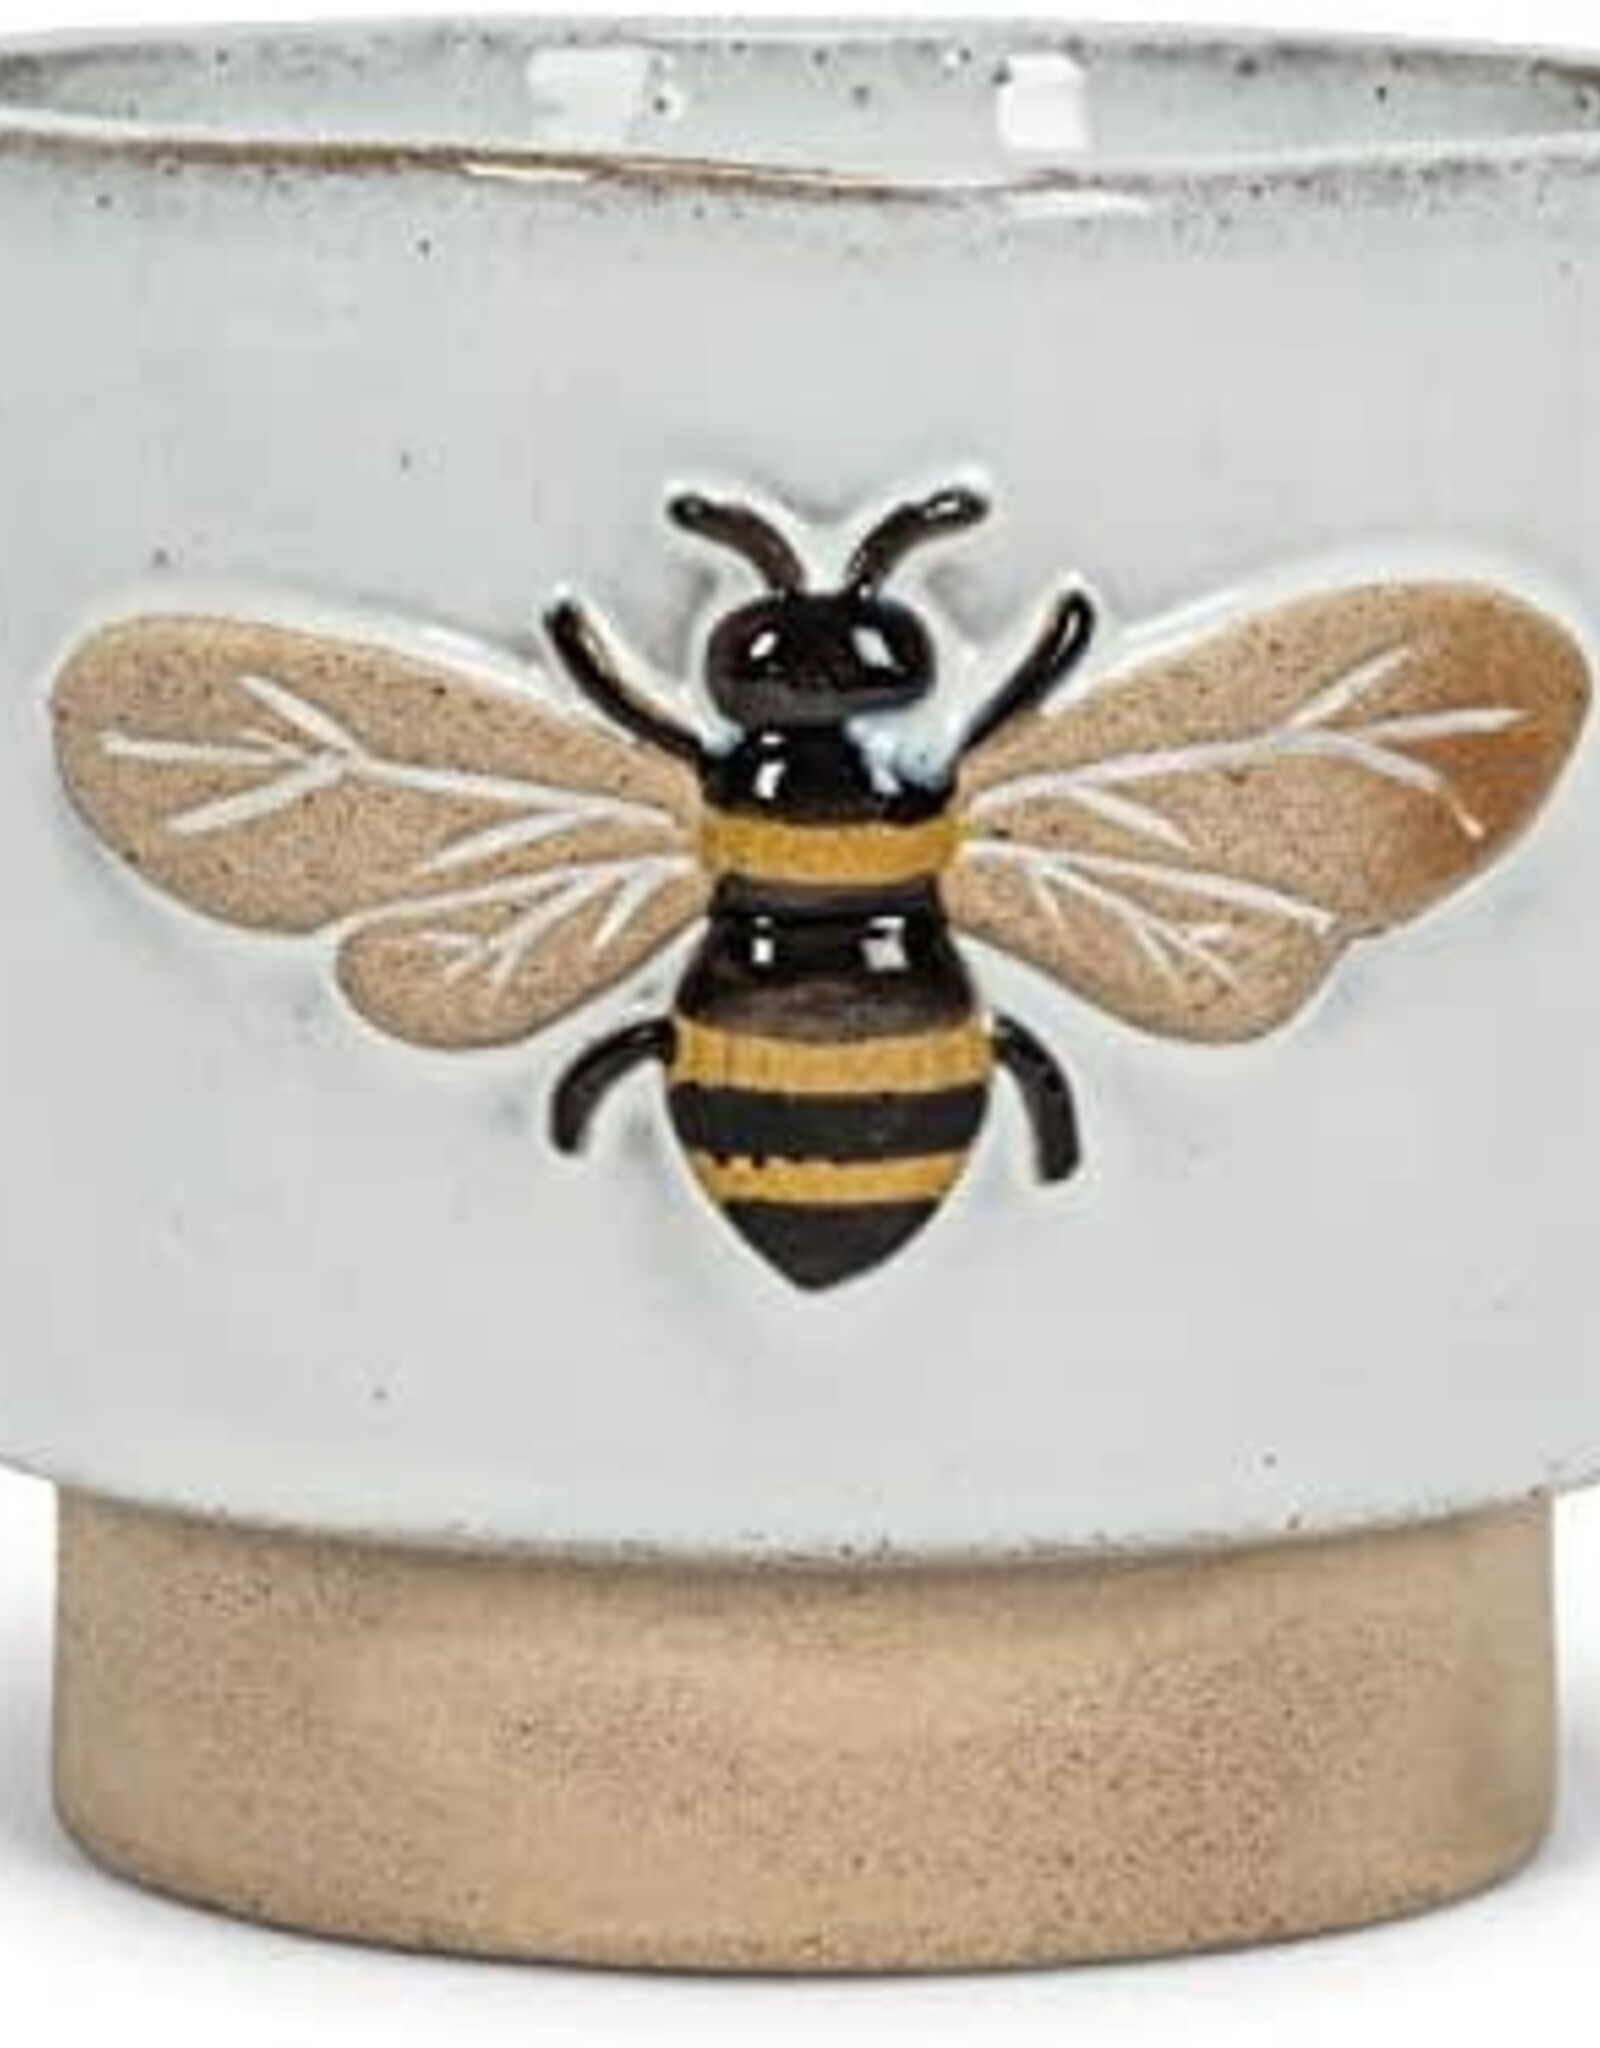 Planter - Bee Lg. 5"